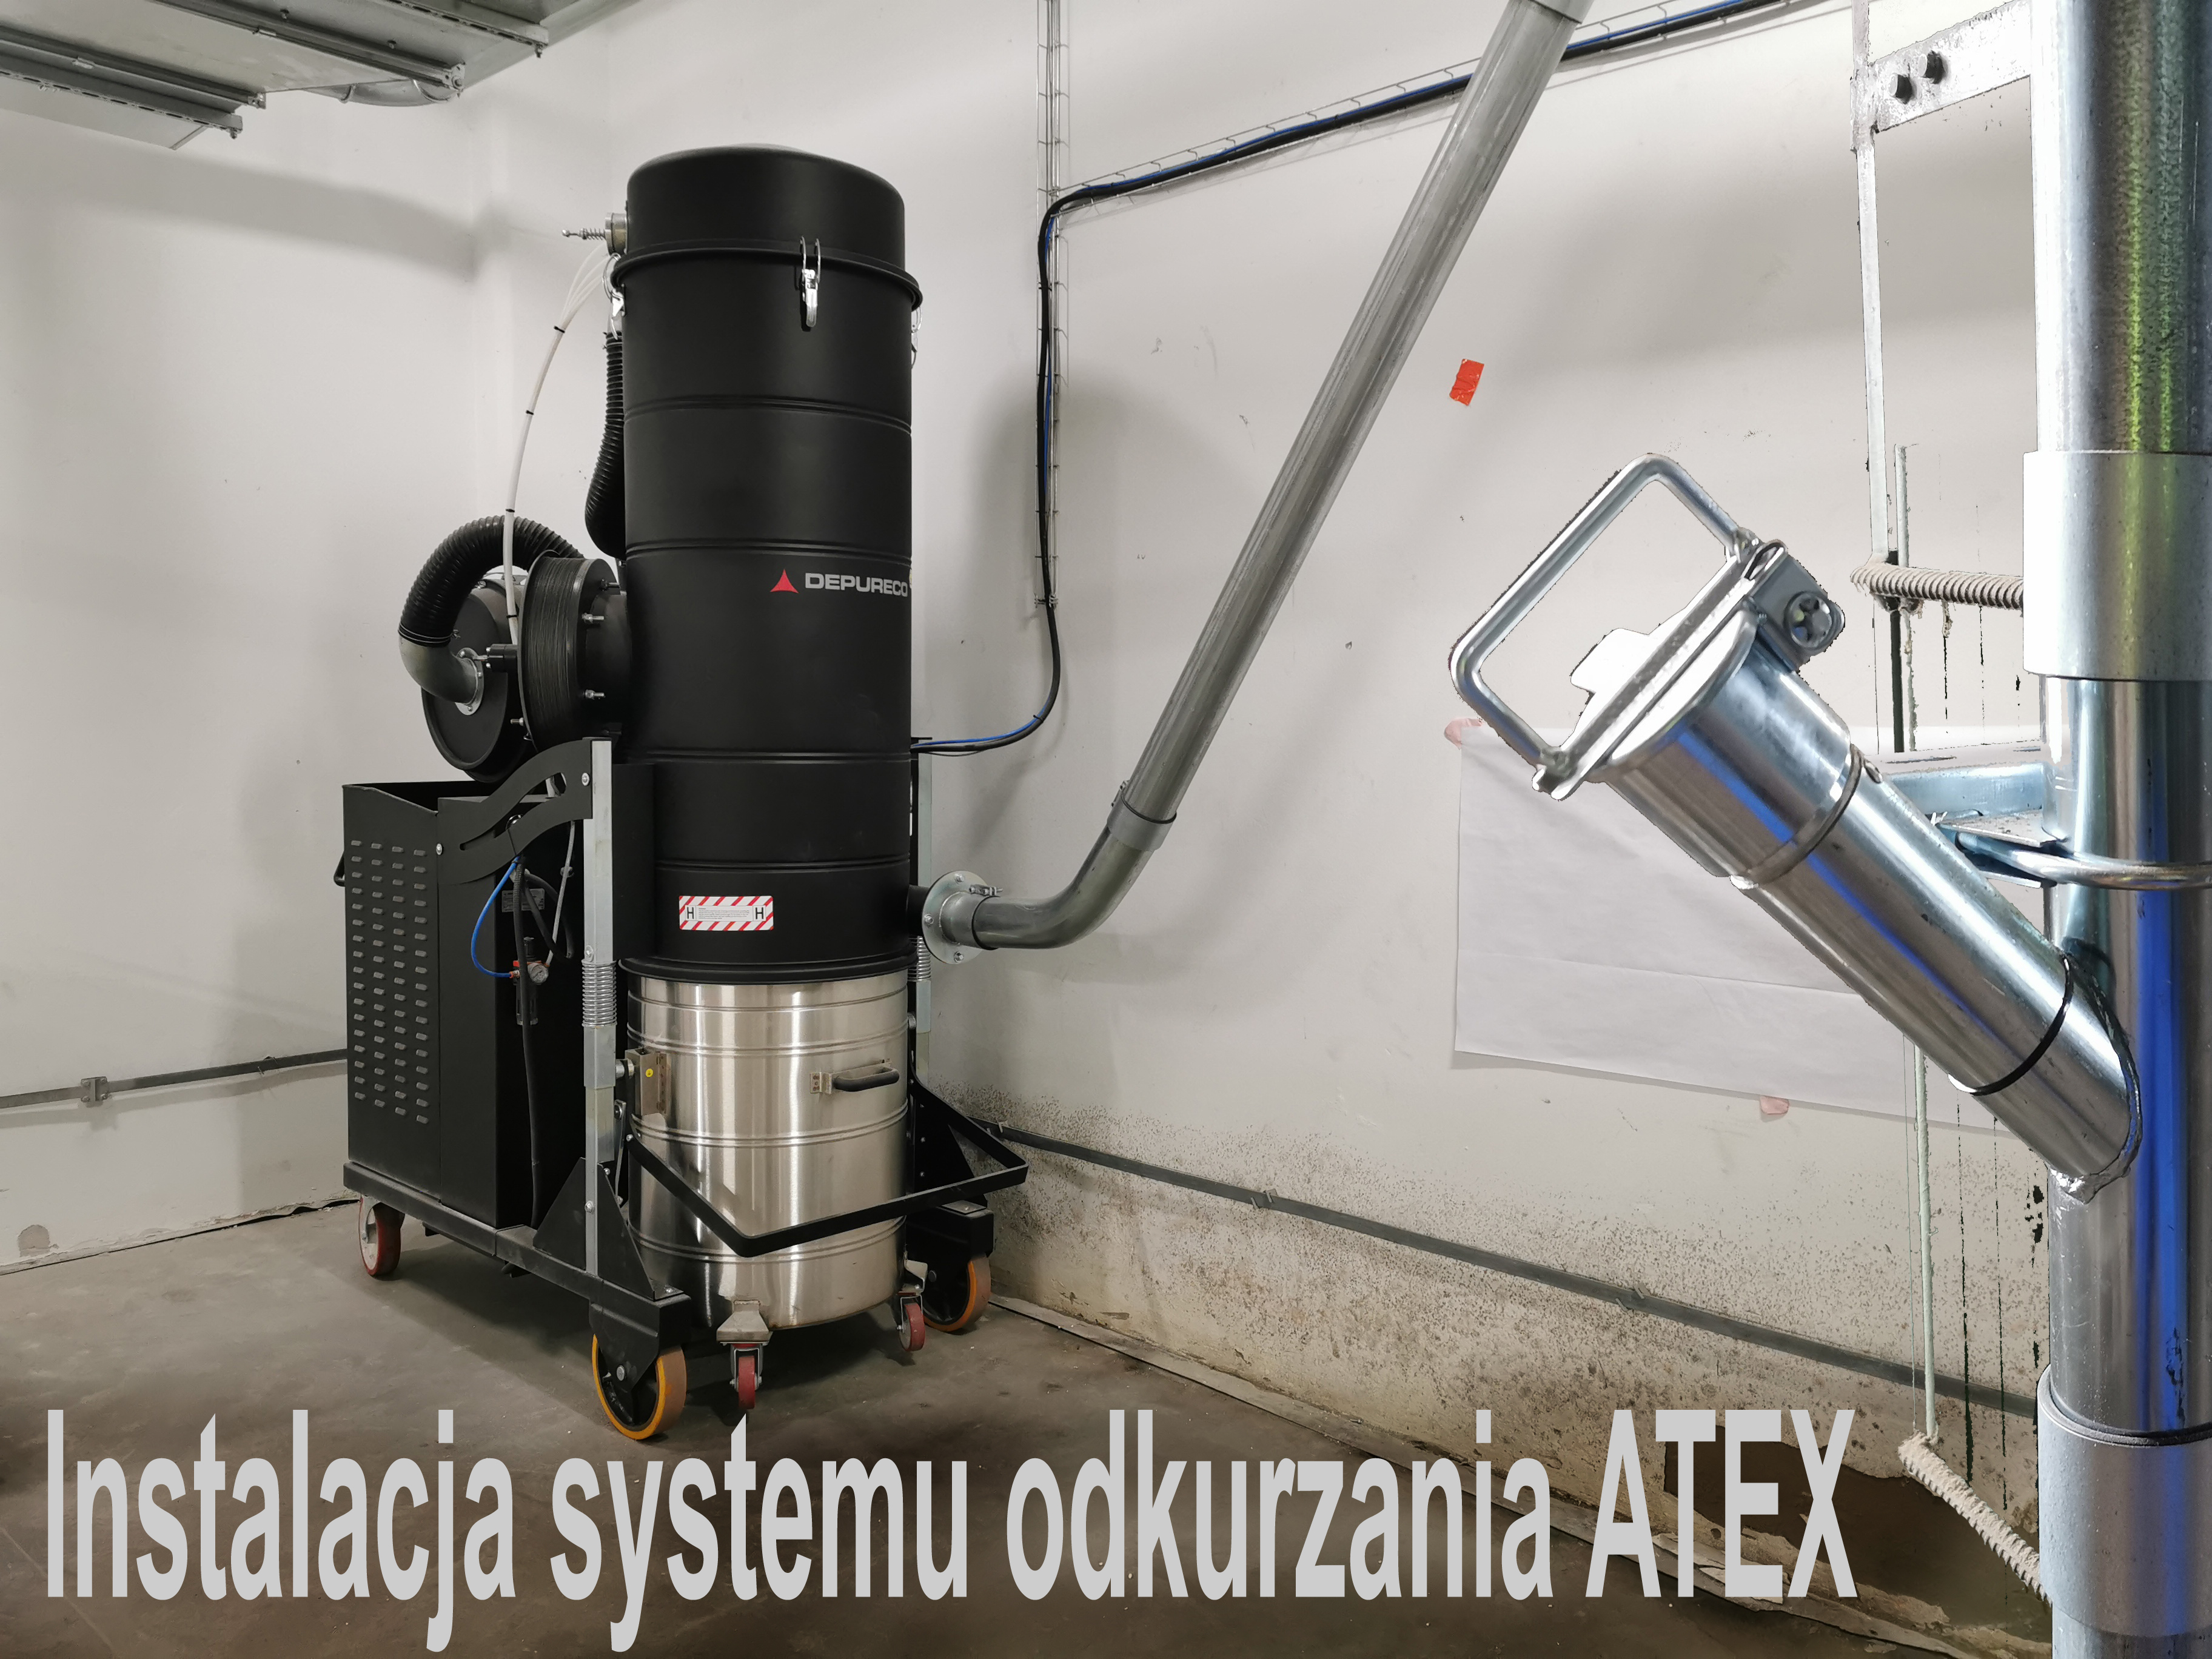 Instalacja systemu odkurzania ATEX